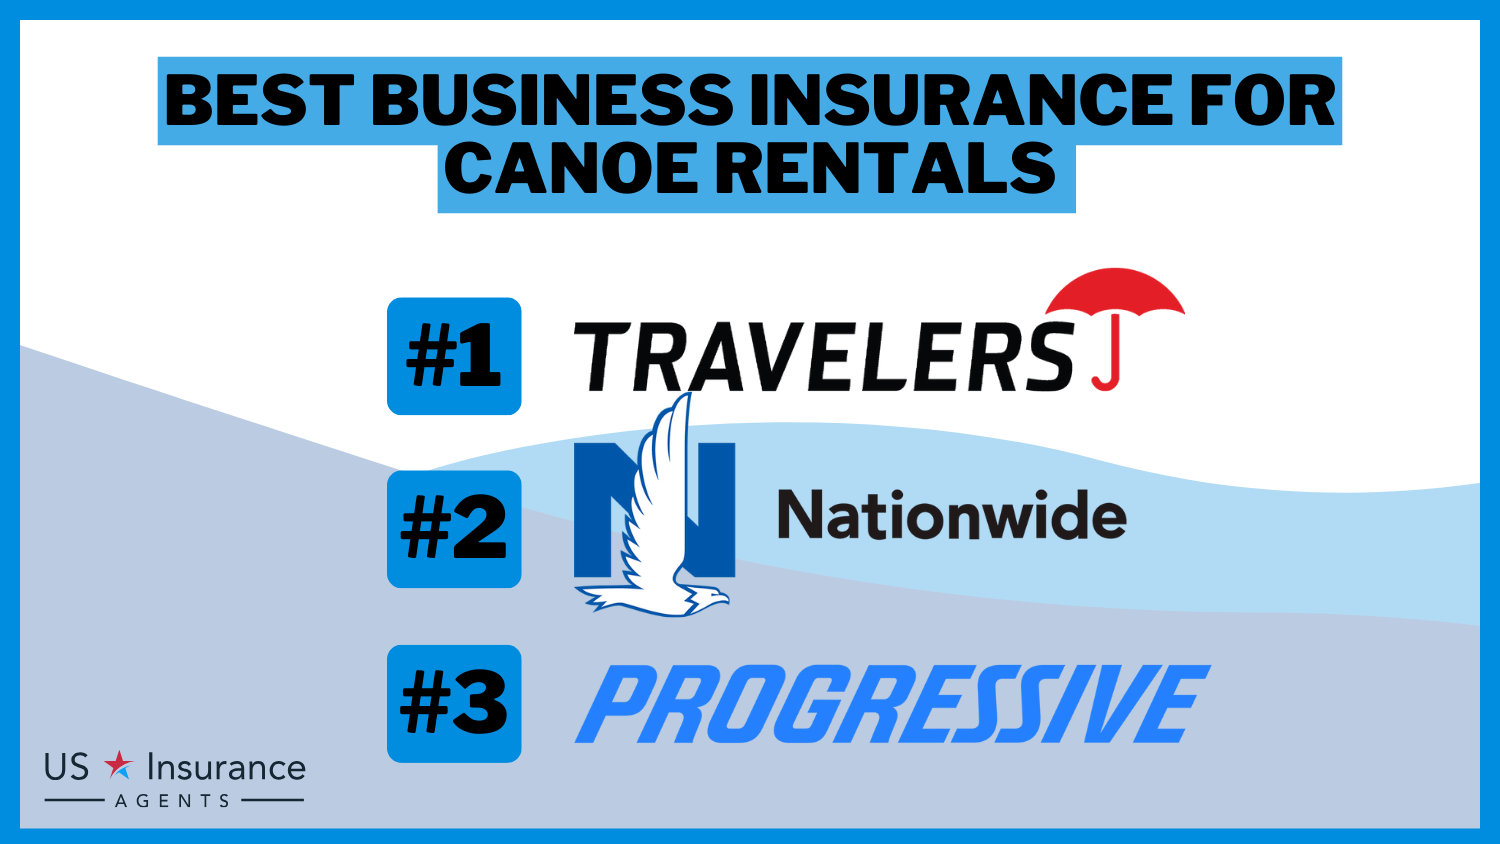 Travelers, Nationwide, Progressive: Best Business Insurance for Canoe Rentals